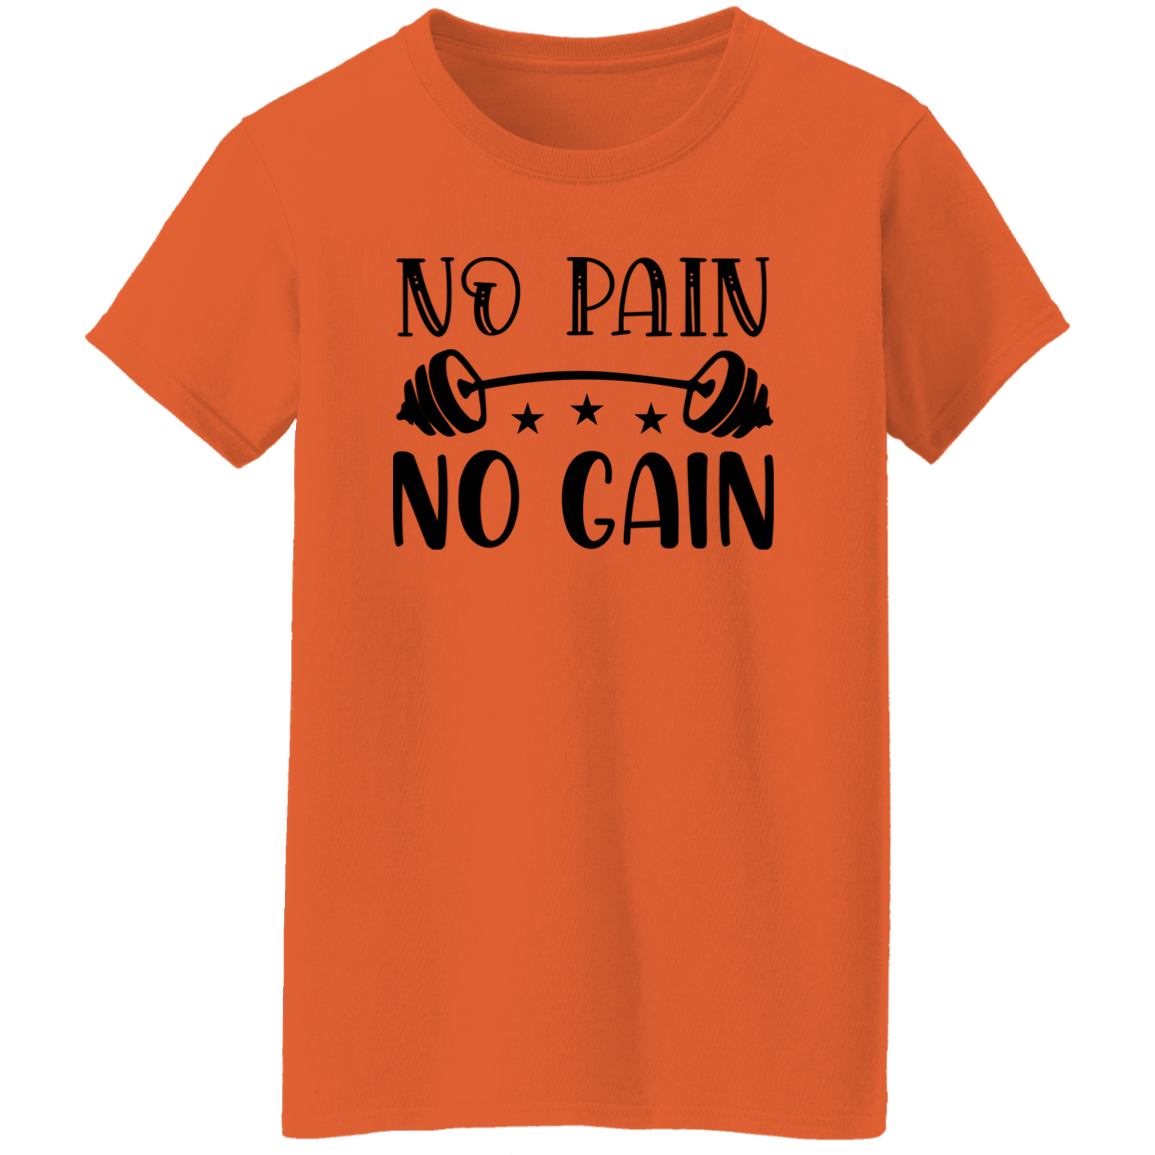 Ladies' Pain T-Shirt